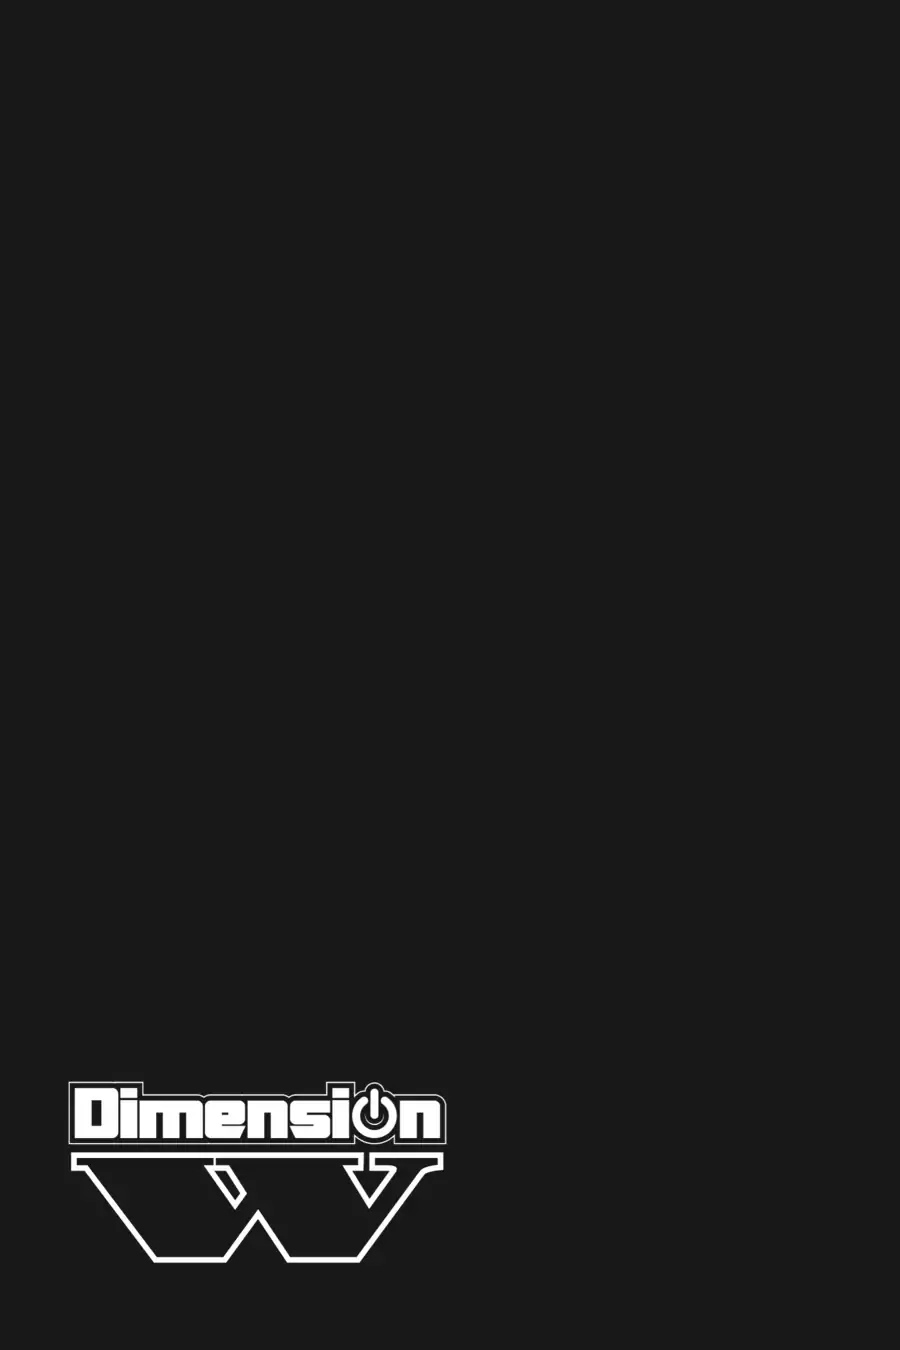 dimension_w_74_26